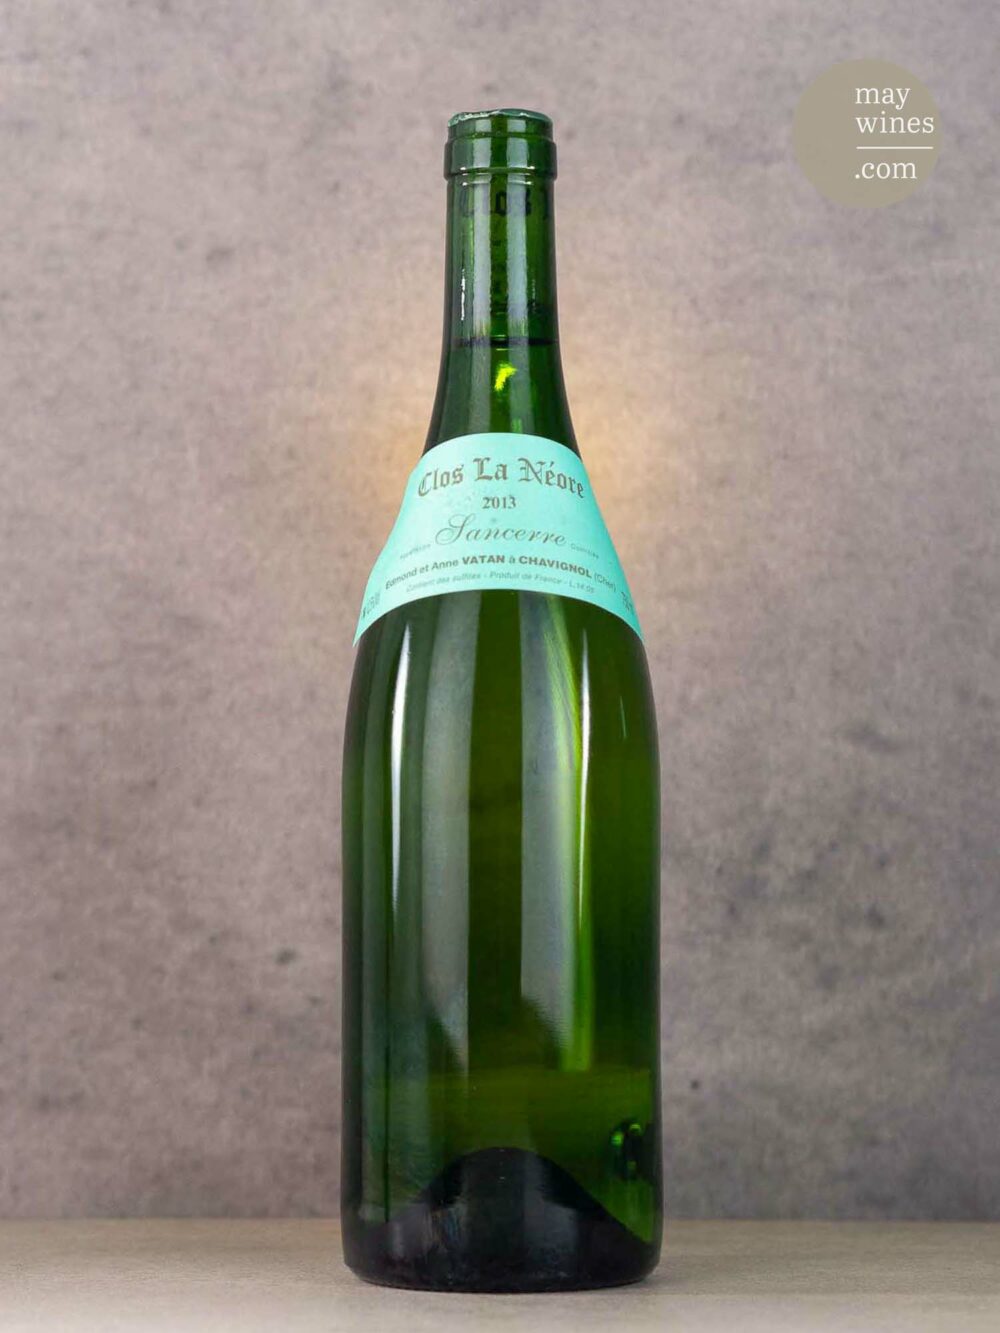 May Wines – Weißwein – 2013 Clos La Néore - Edmond Vatan